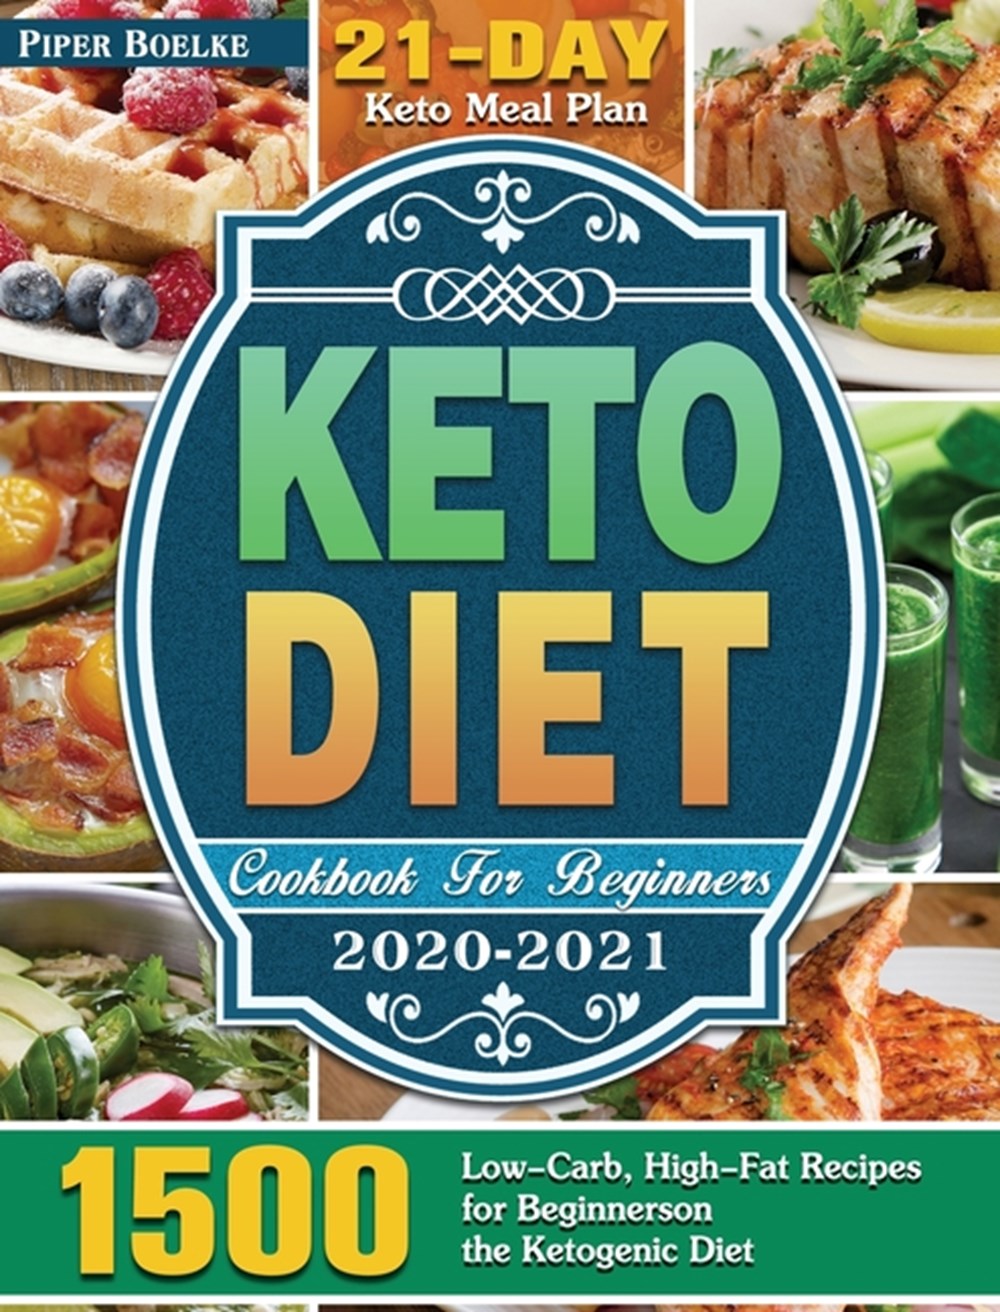 Buy Keto Diet Cookbook For Beginners 20202021 1500 LowCarb, HighFat